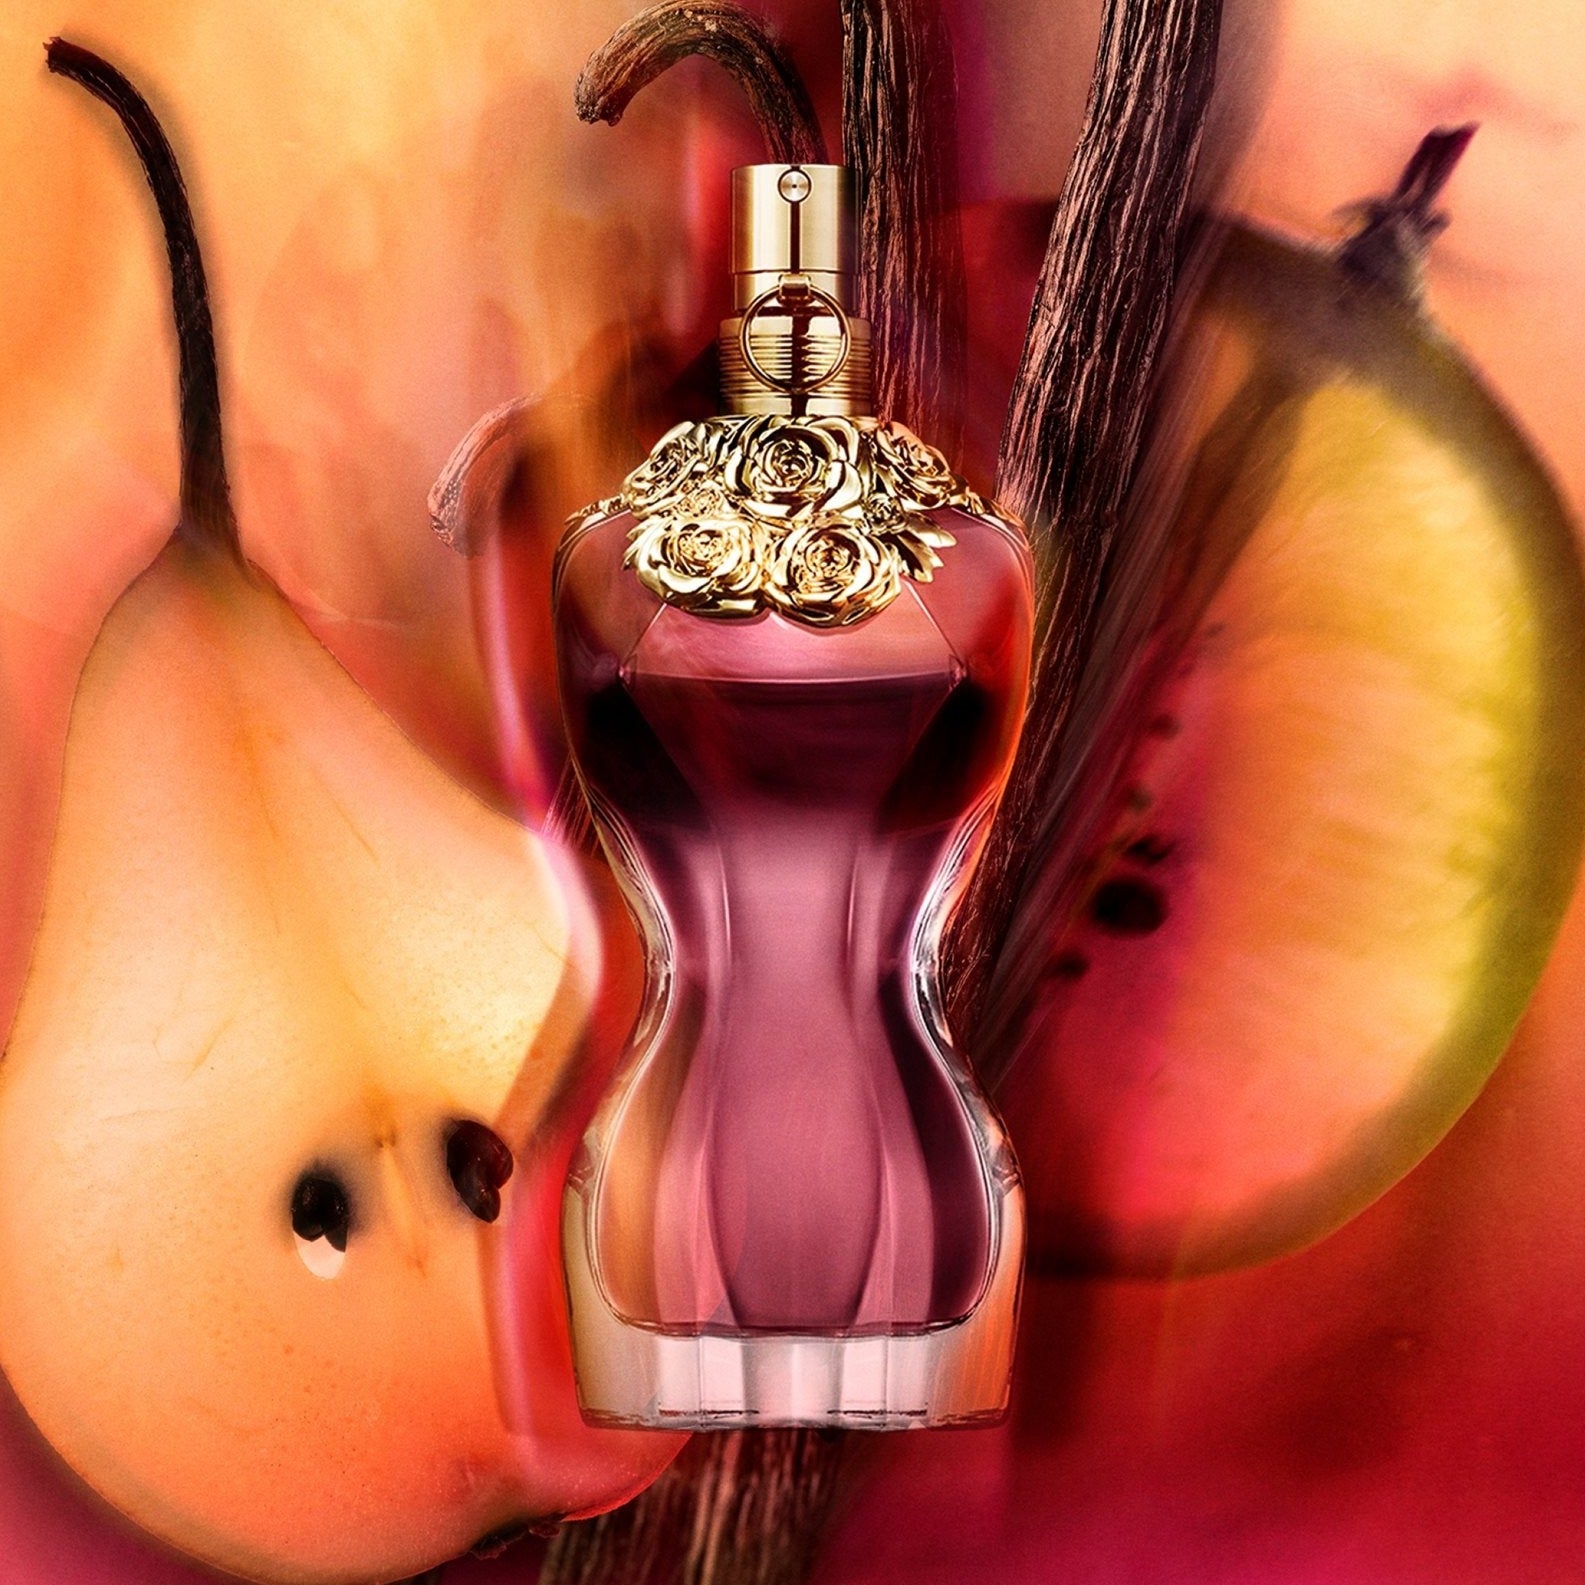 Jean Paul Gaultier La Belle EDP Body Lotion Set | My Perfume Shop Australia